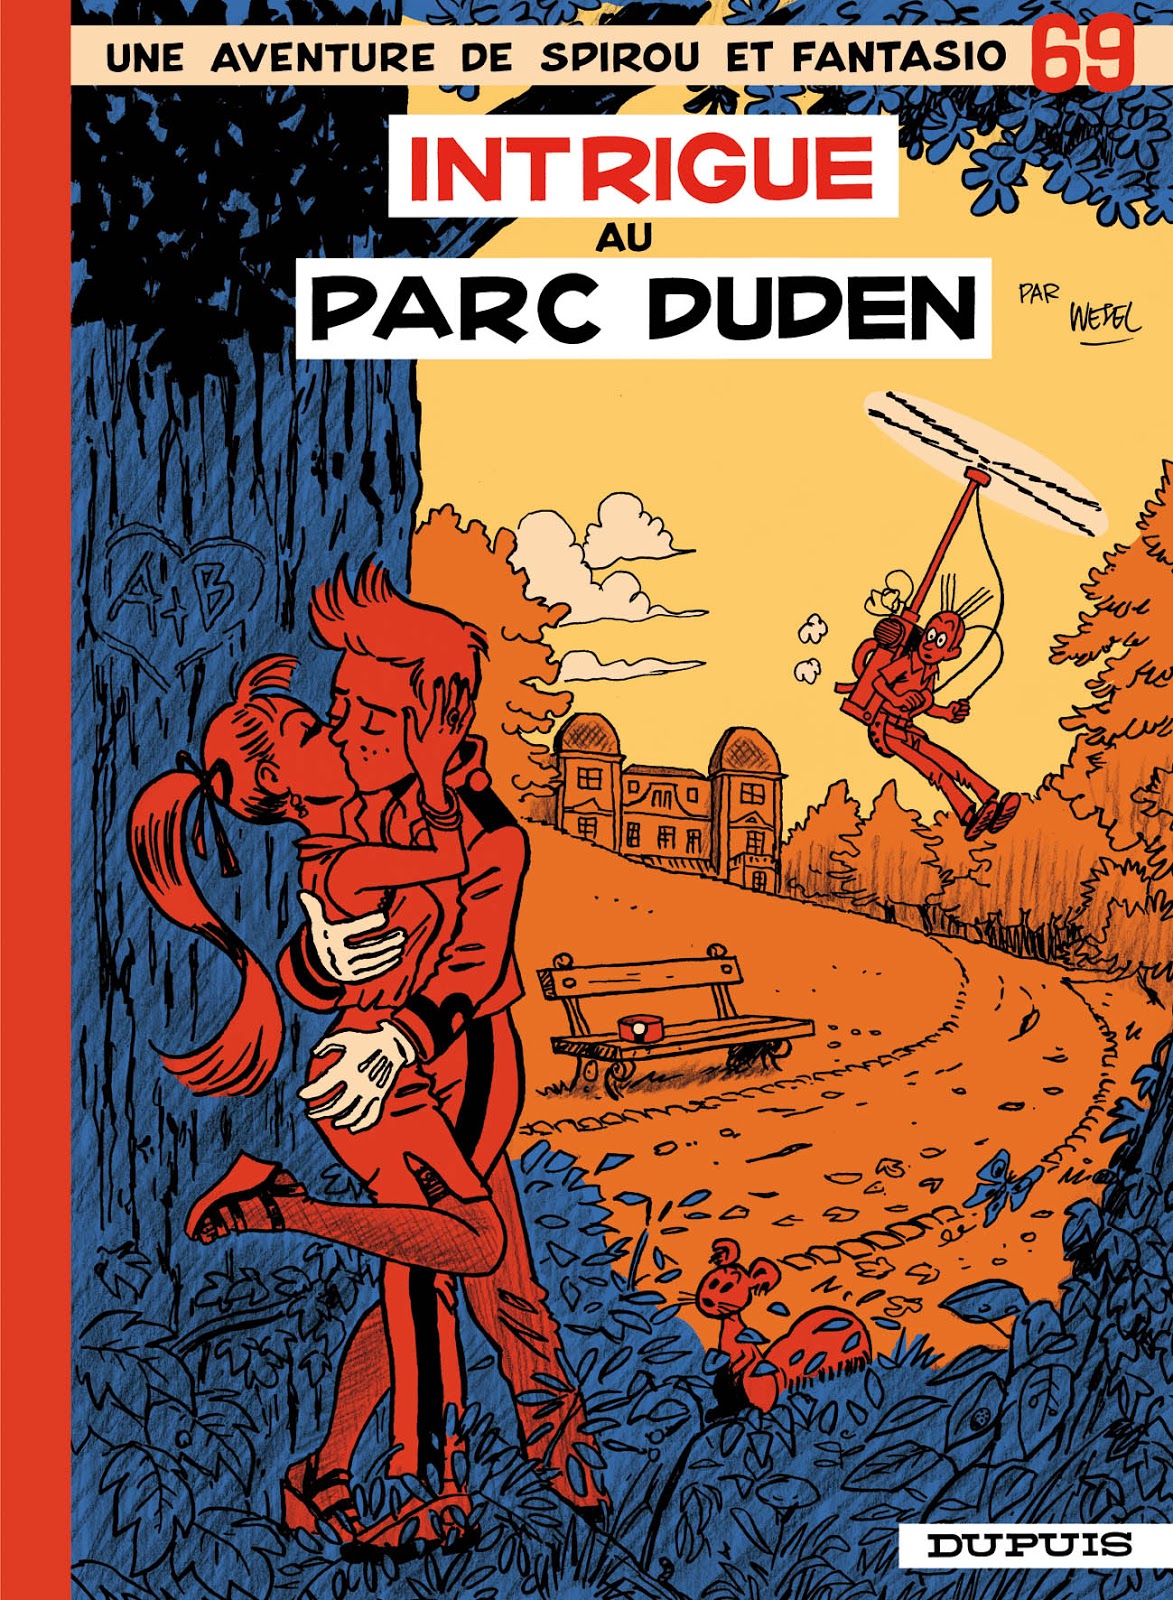 'Intrigue au Parc Duden' (ill. Bruno Wesel; (c) the artist, 2013; Spirou (c) Dupuis; image from blogspot.com)